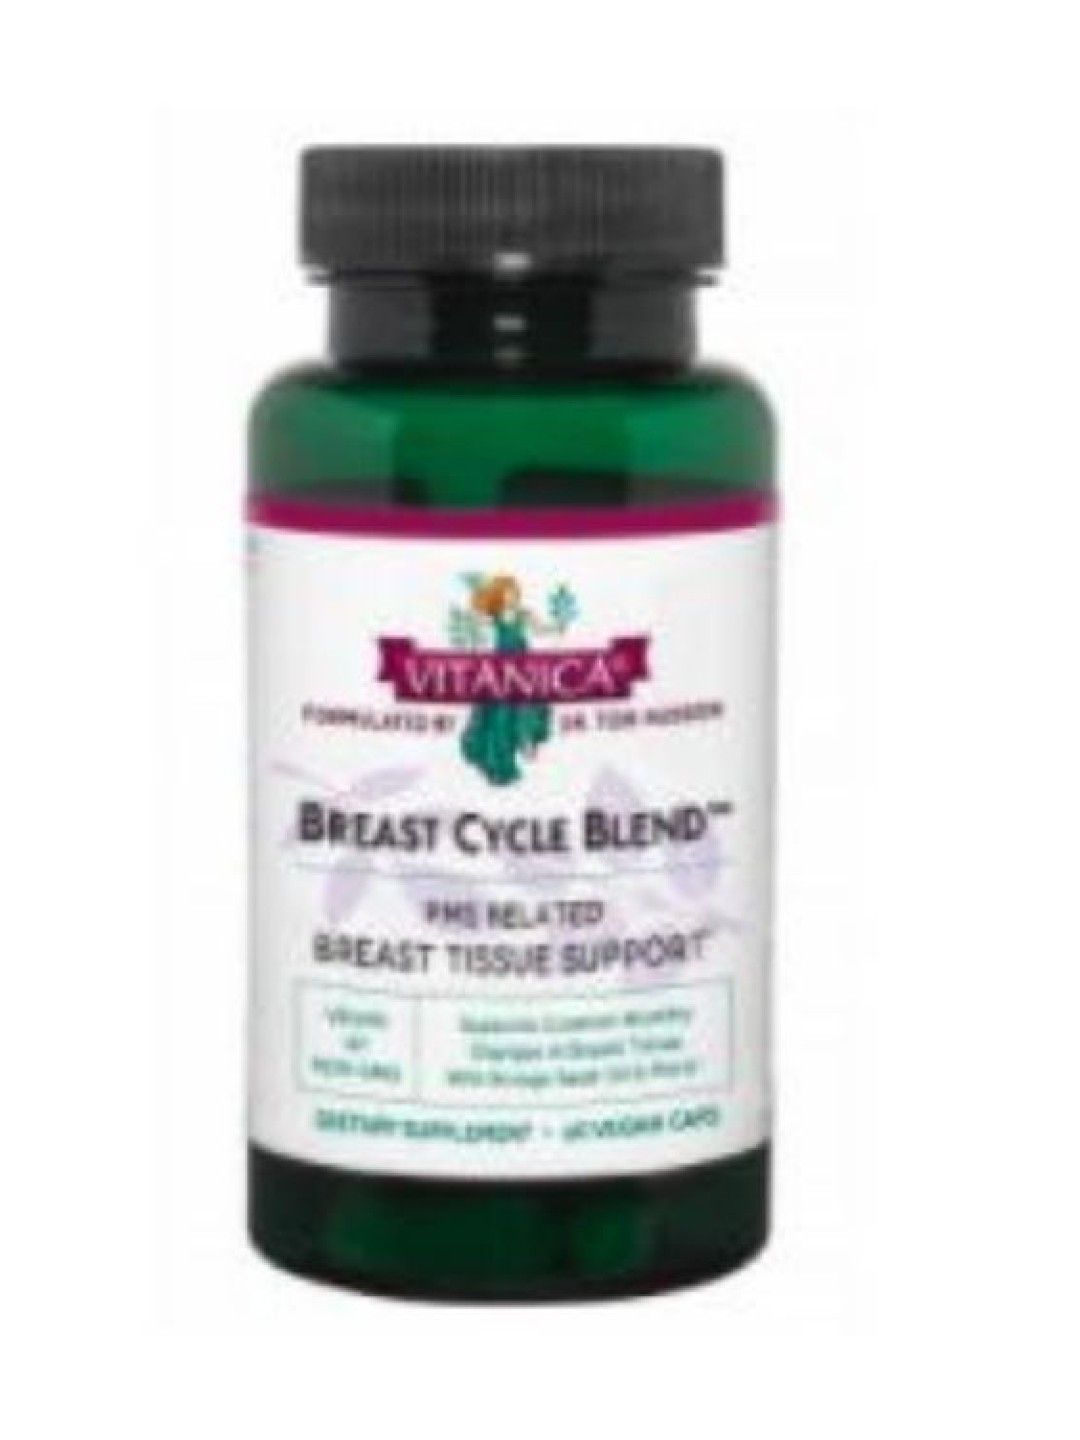 Vitanica Breast Cycle Blend (60 Capsules)